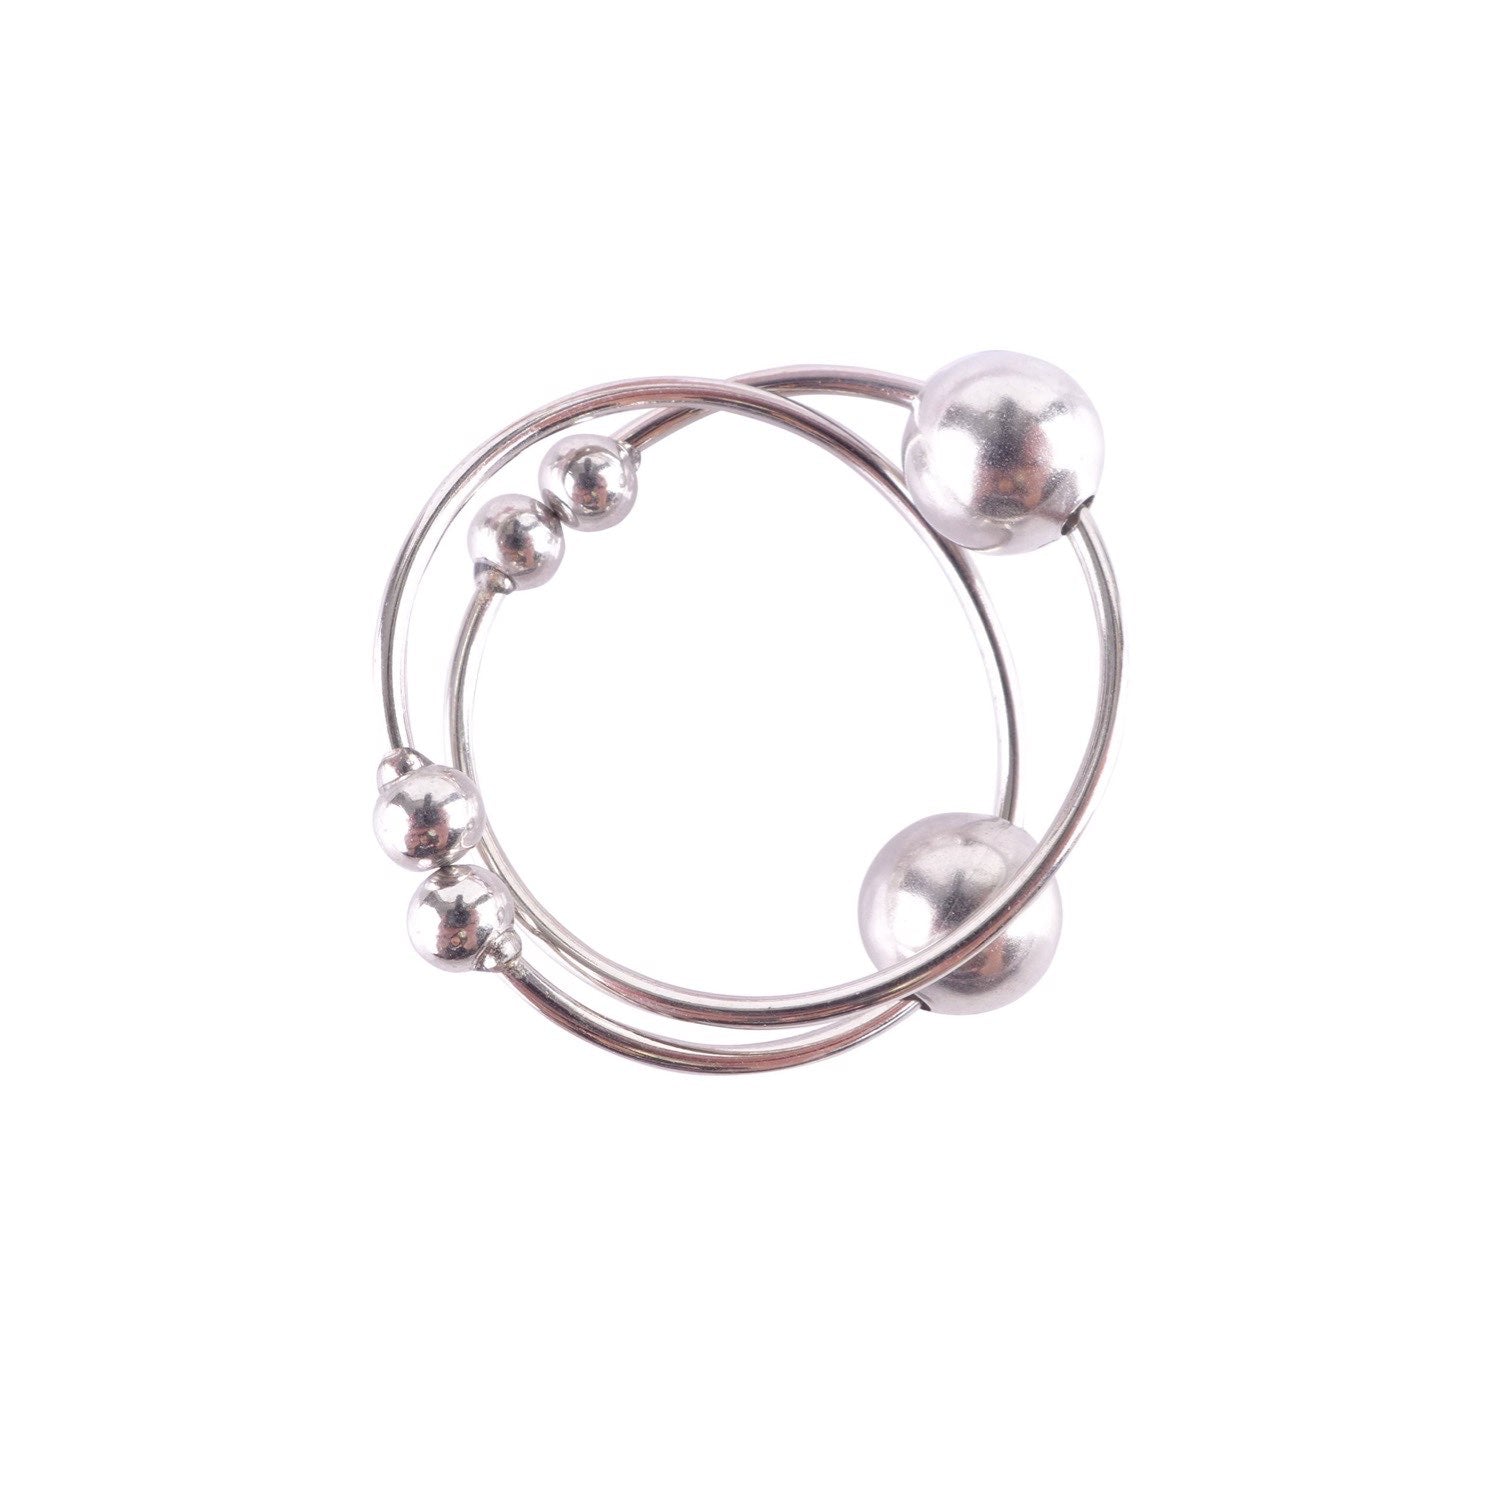  Bull Rings - Silver Nipple Rings by Pipedream